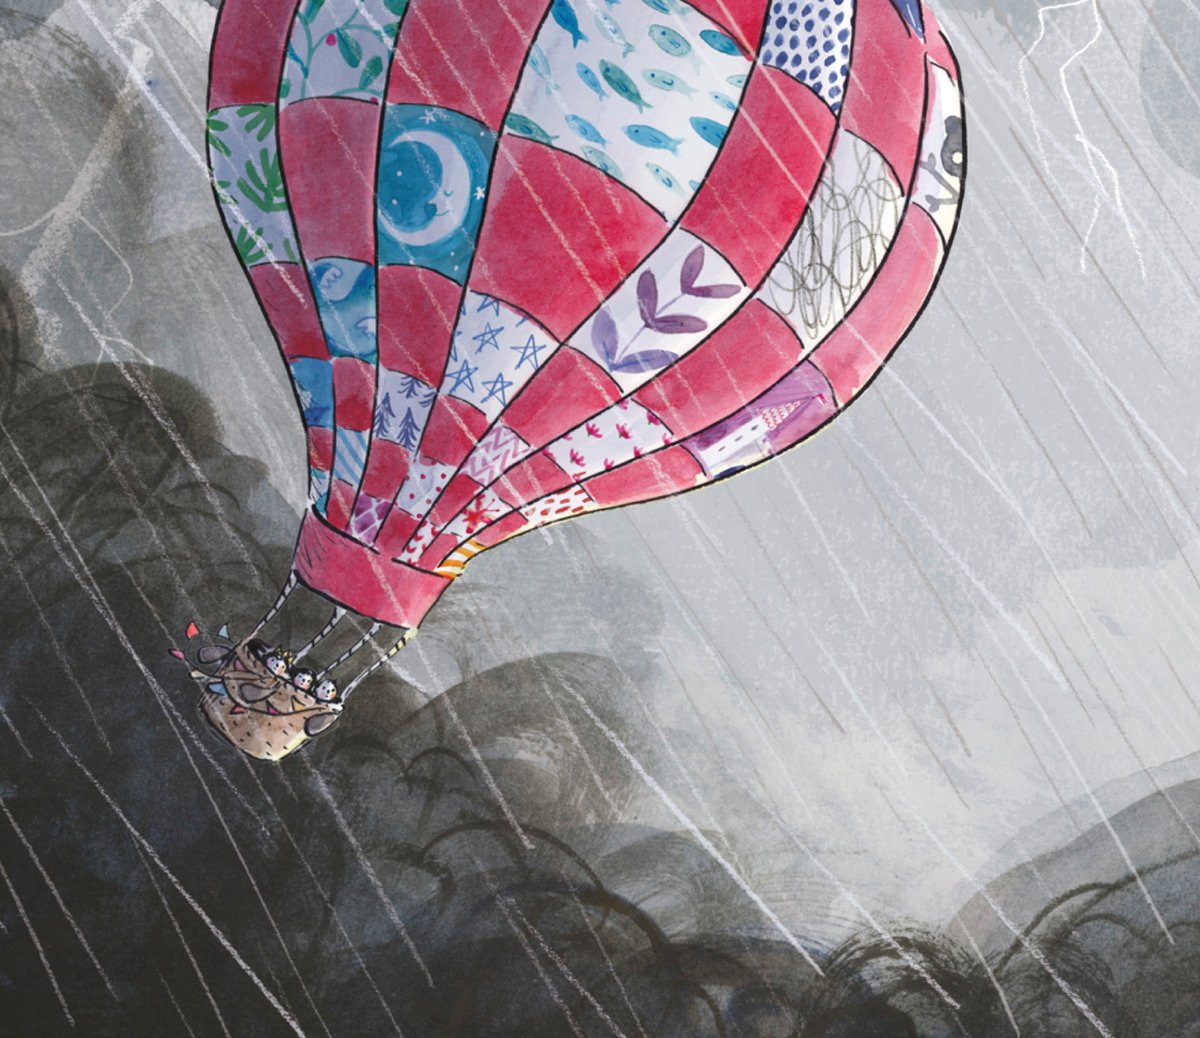 becky-cameron-hot-air-balloon-in-storm-illustration.jpg